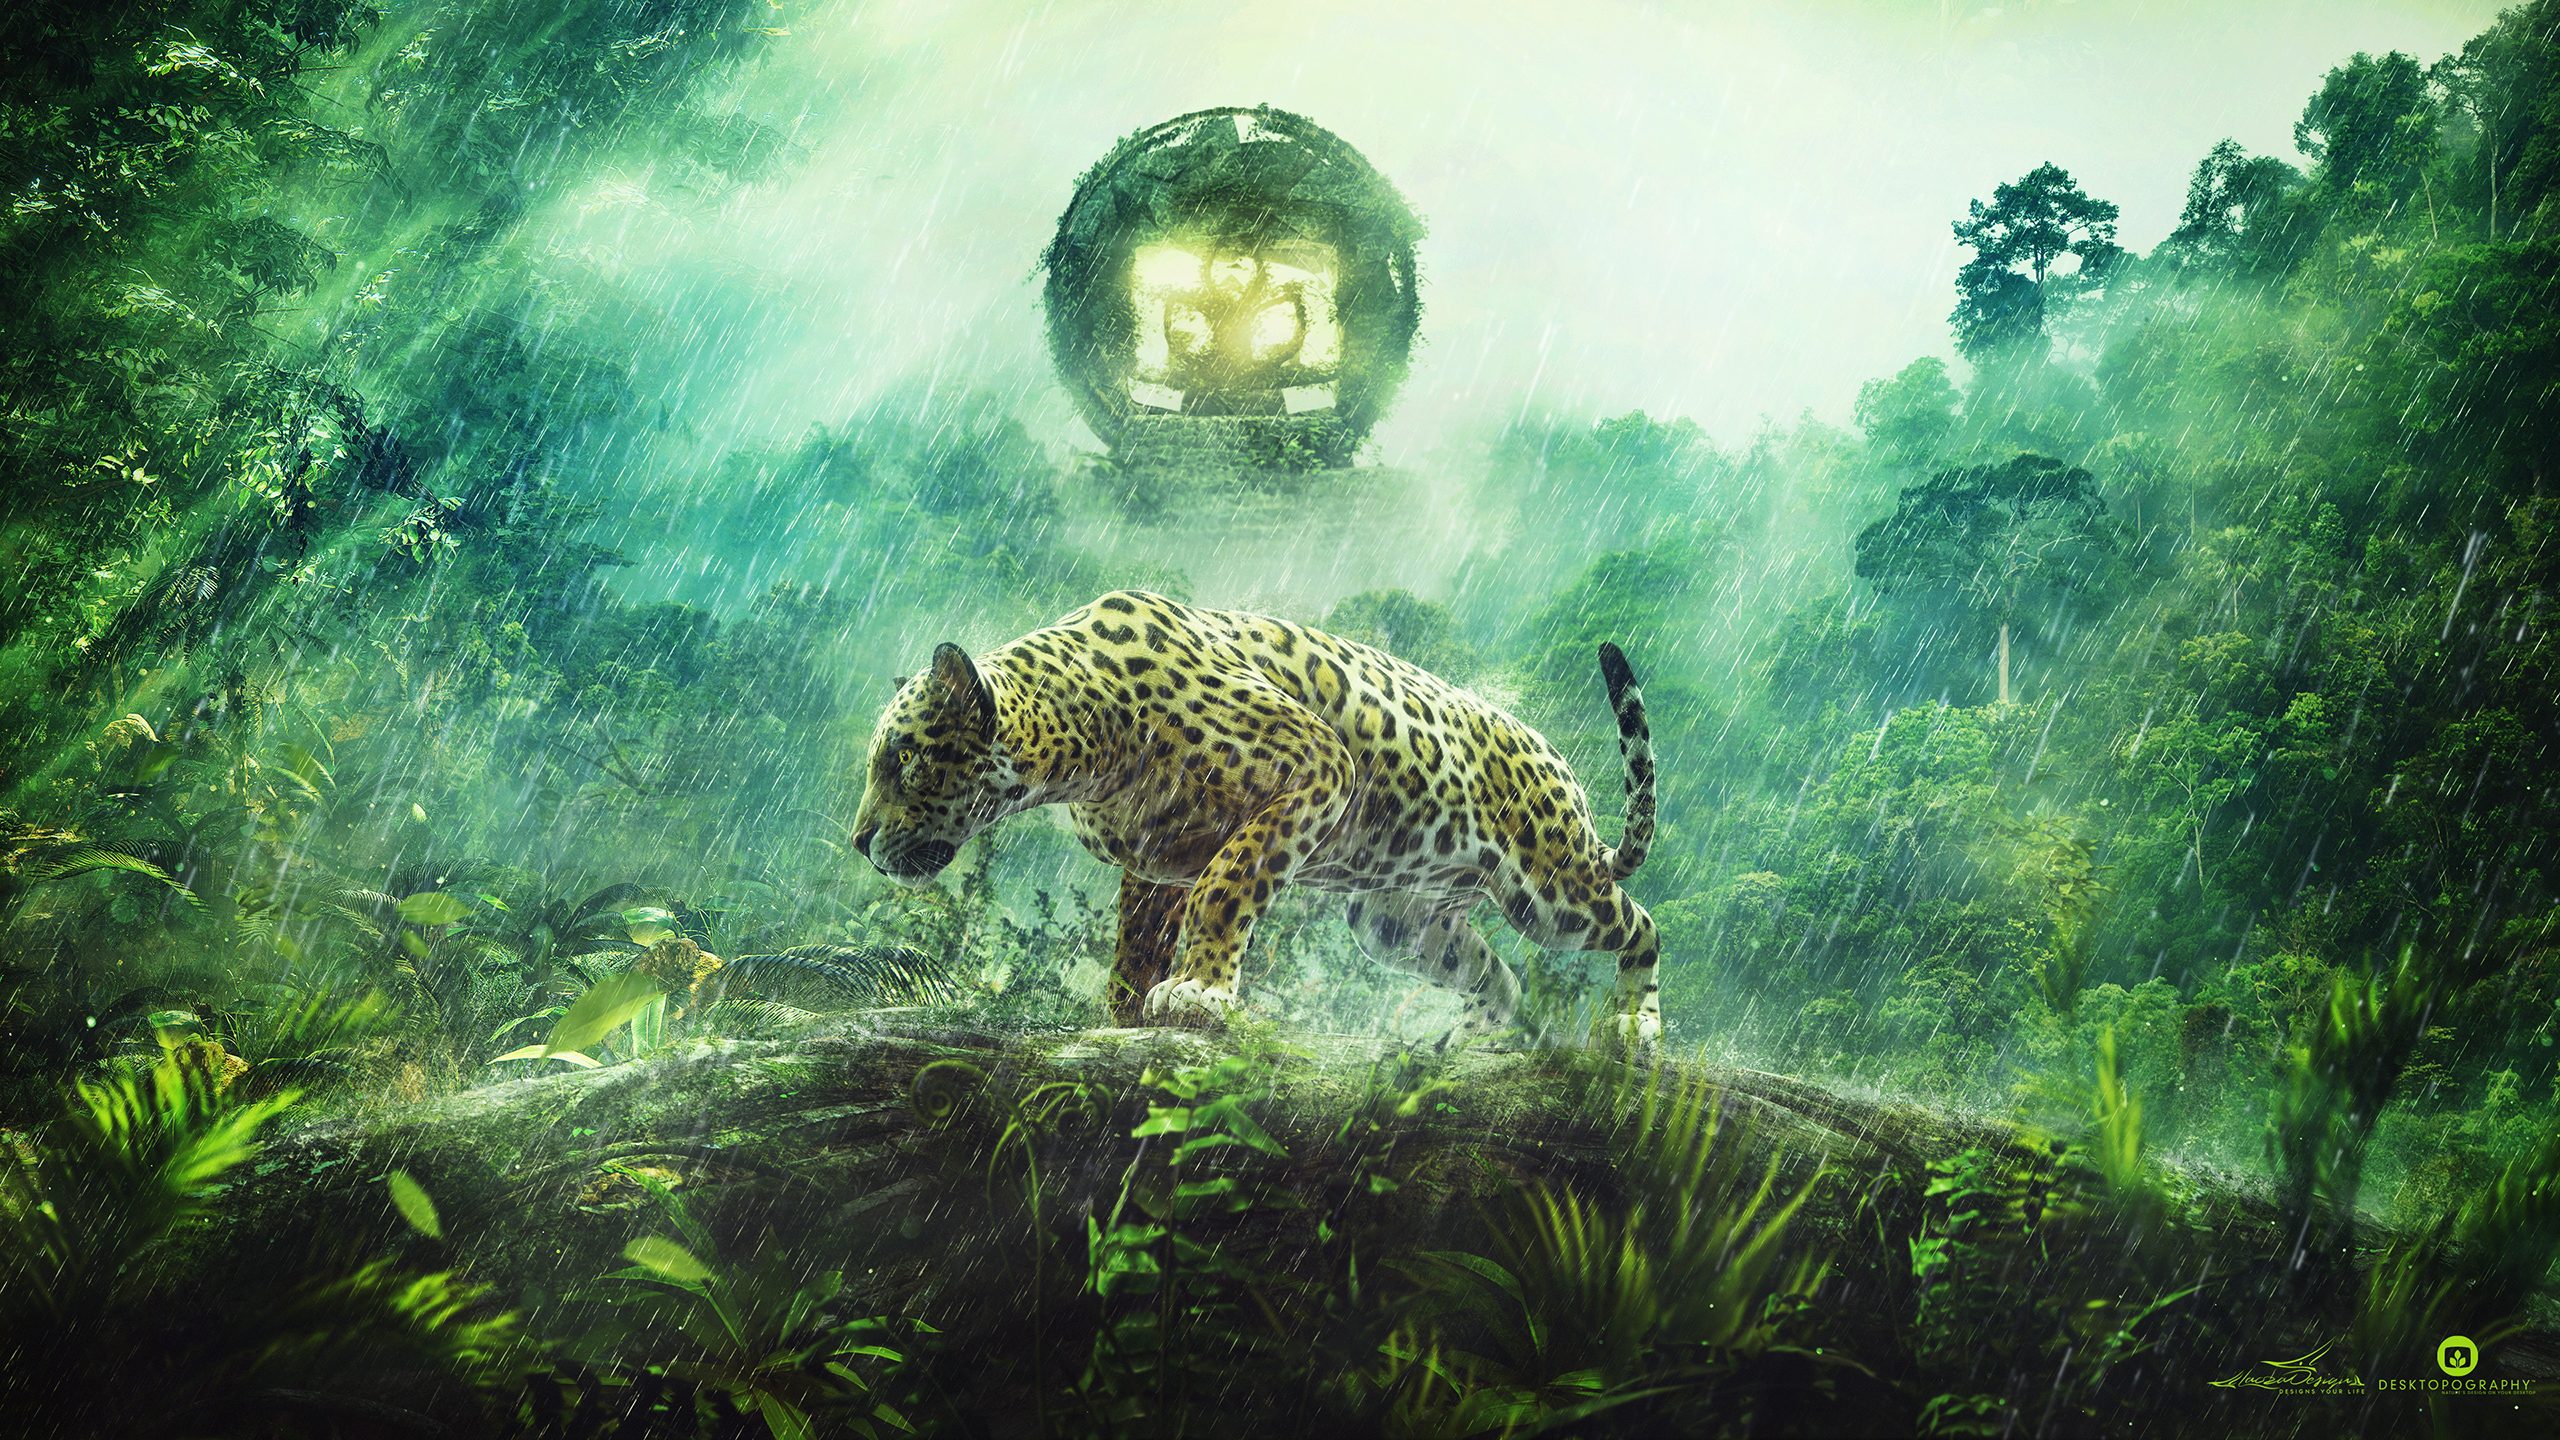 Desktopography Jaguar Photoshop Digital Animals Cats Jungle Plants Lights Sun Rays Rain Artwork Gree 2560x1440